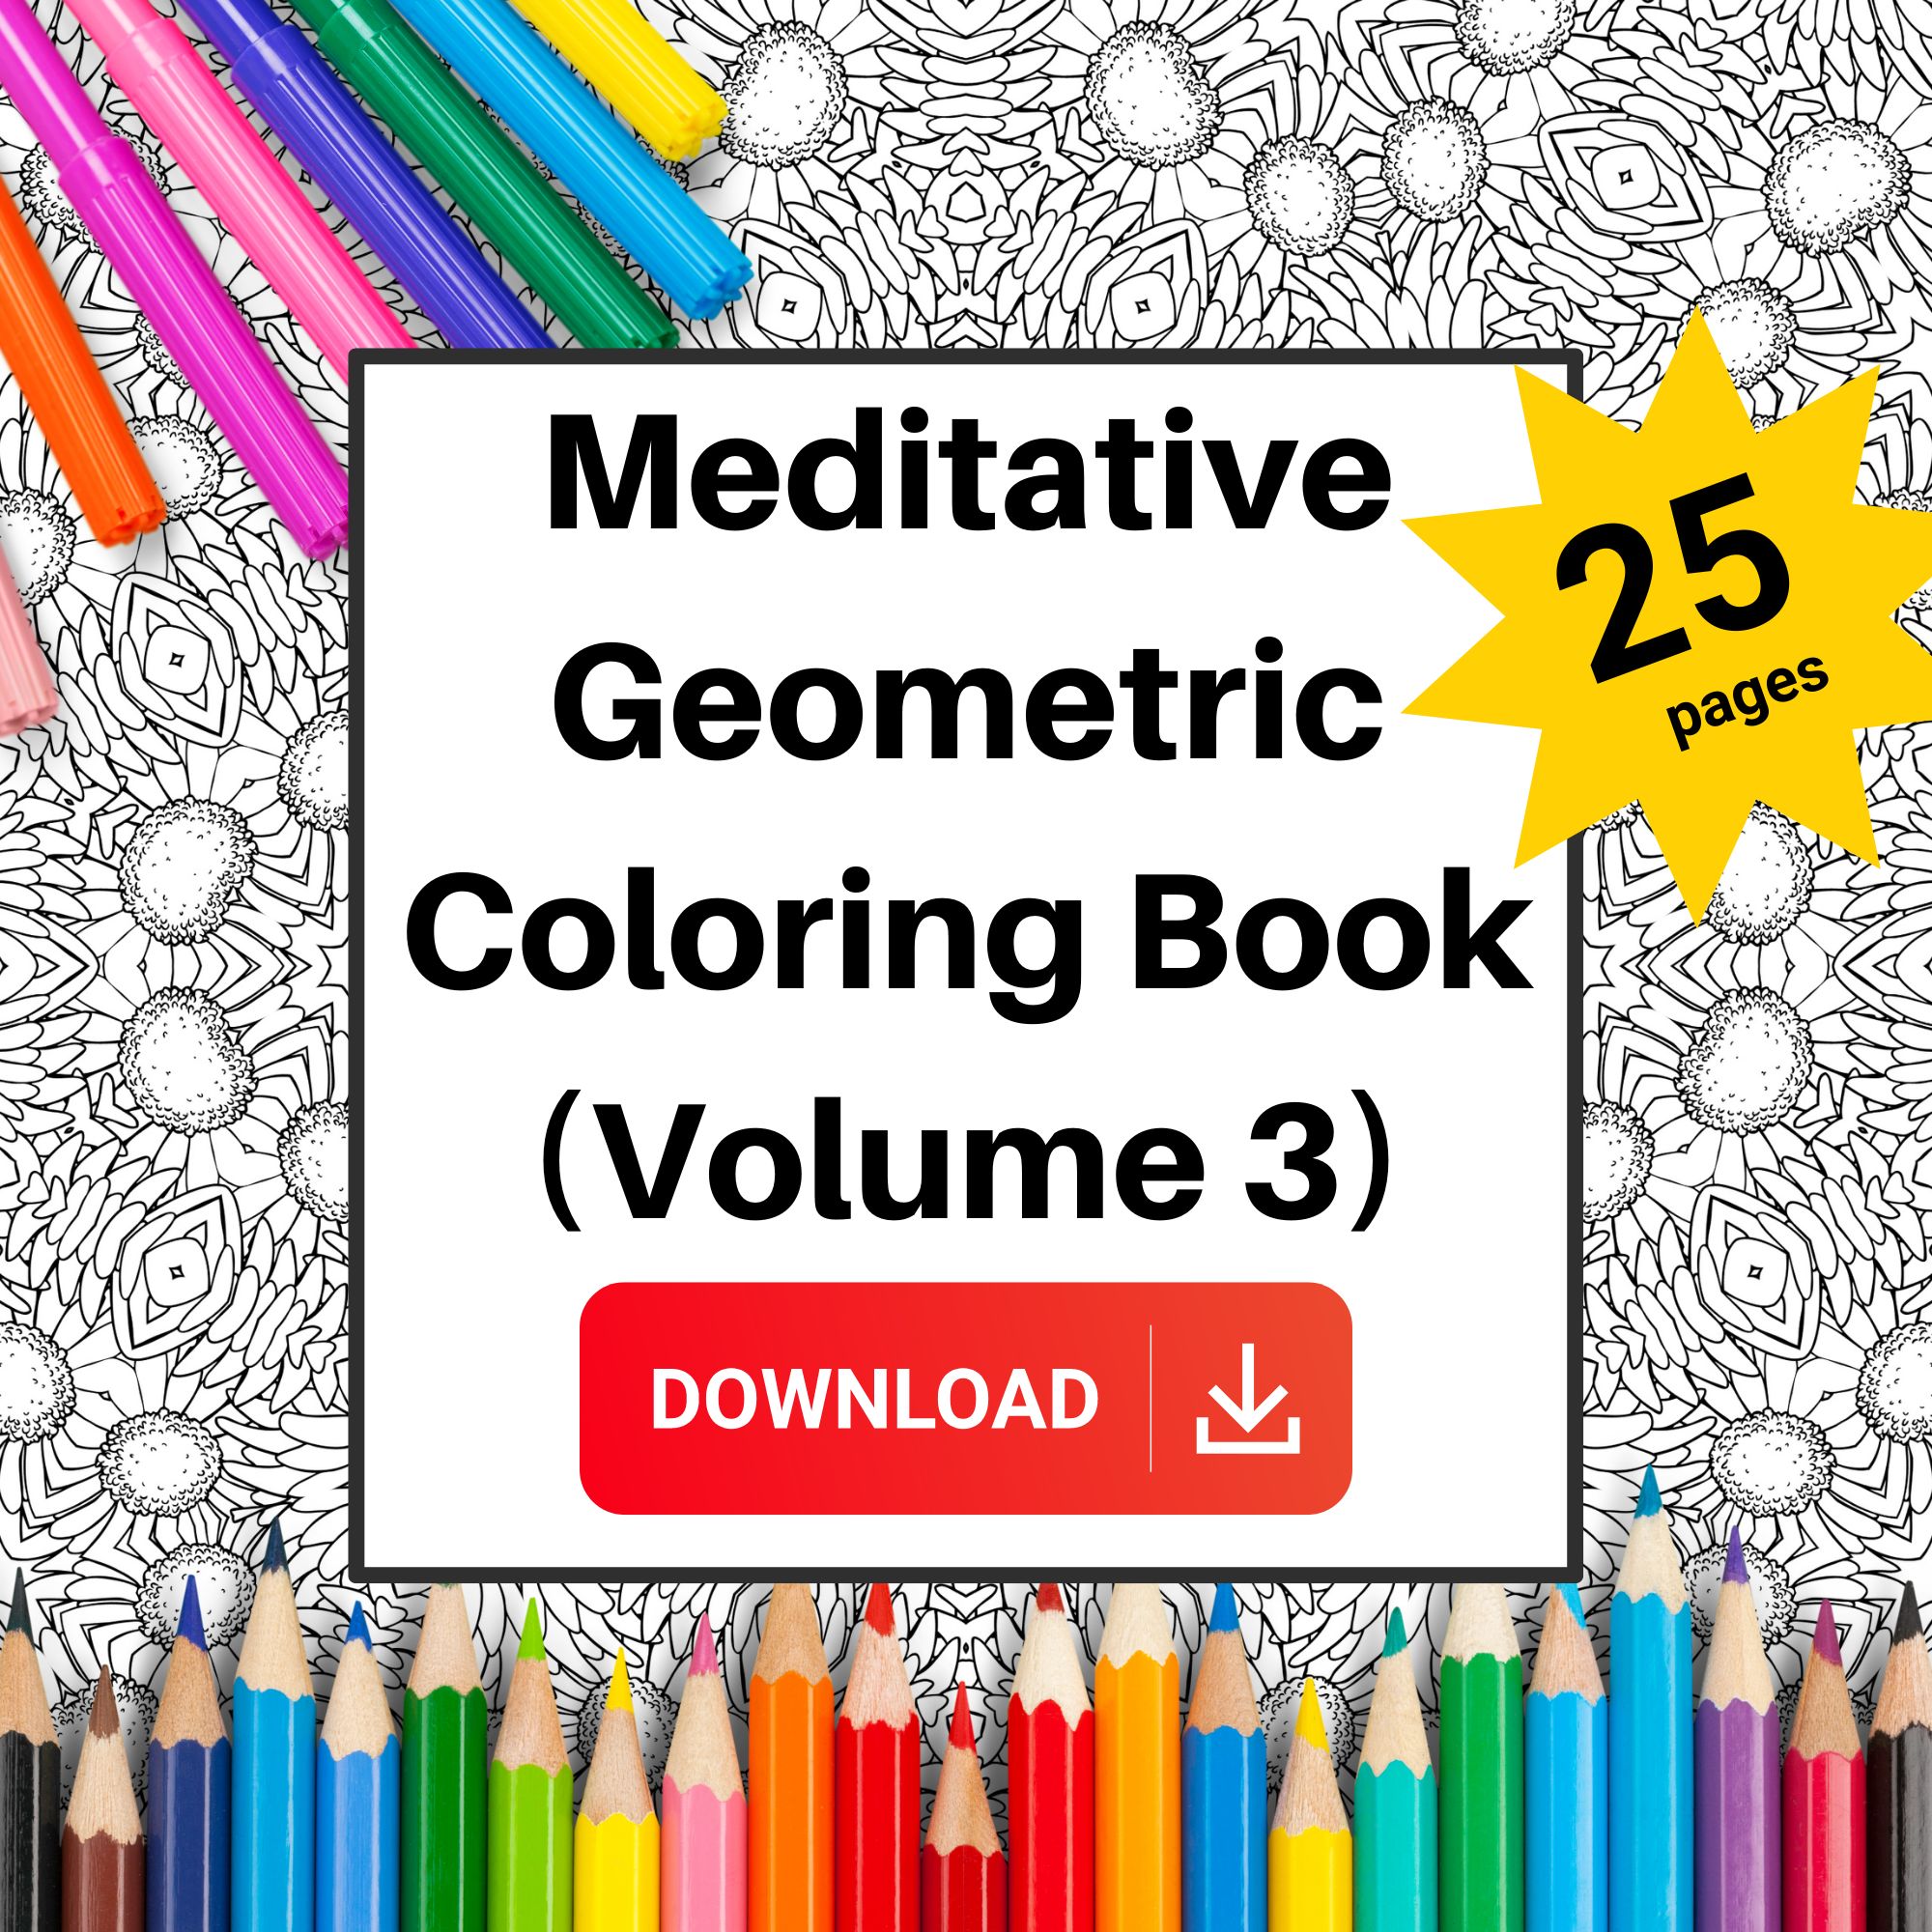 Meditative Geometric Coloring Book (Vol 3)